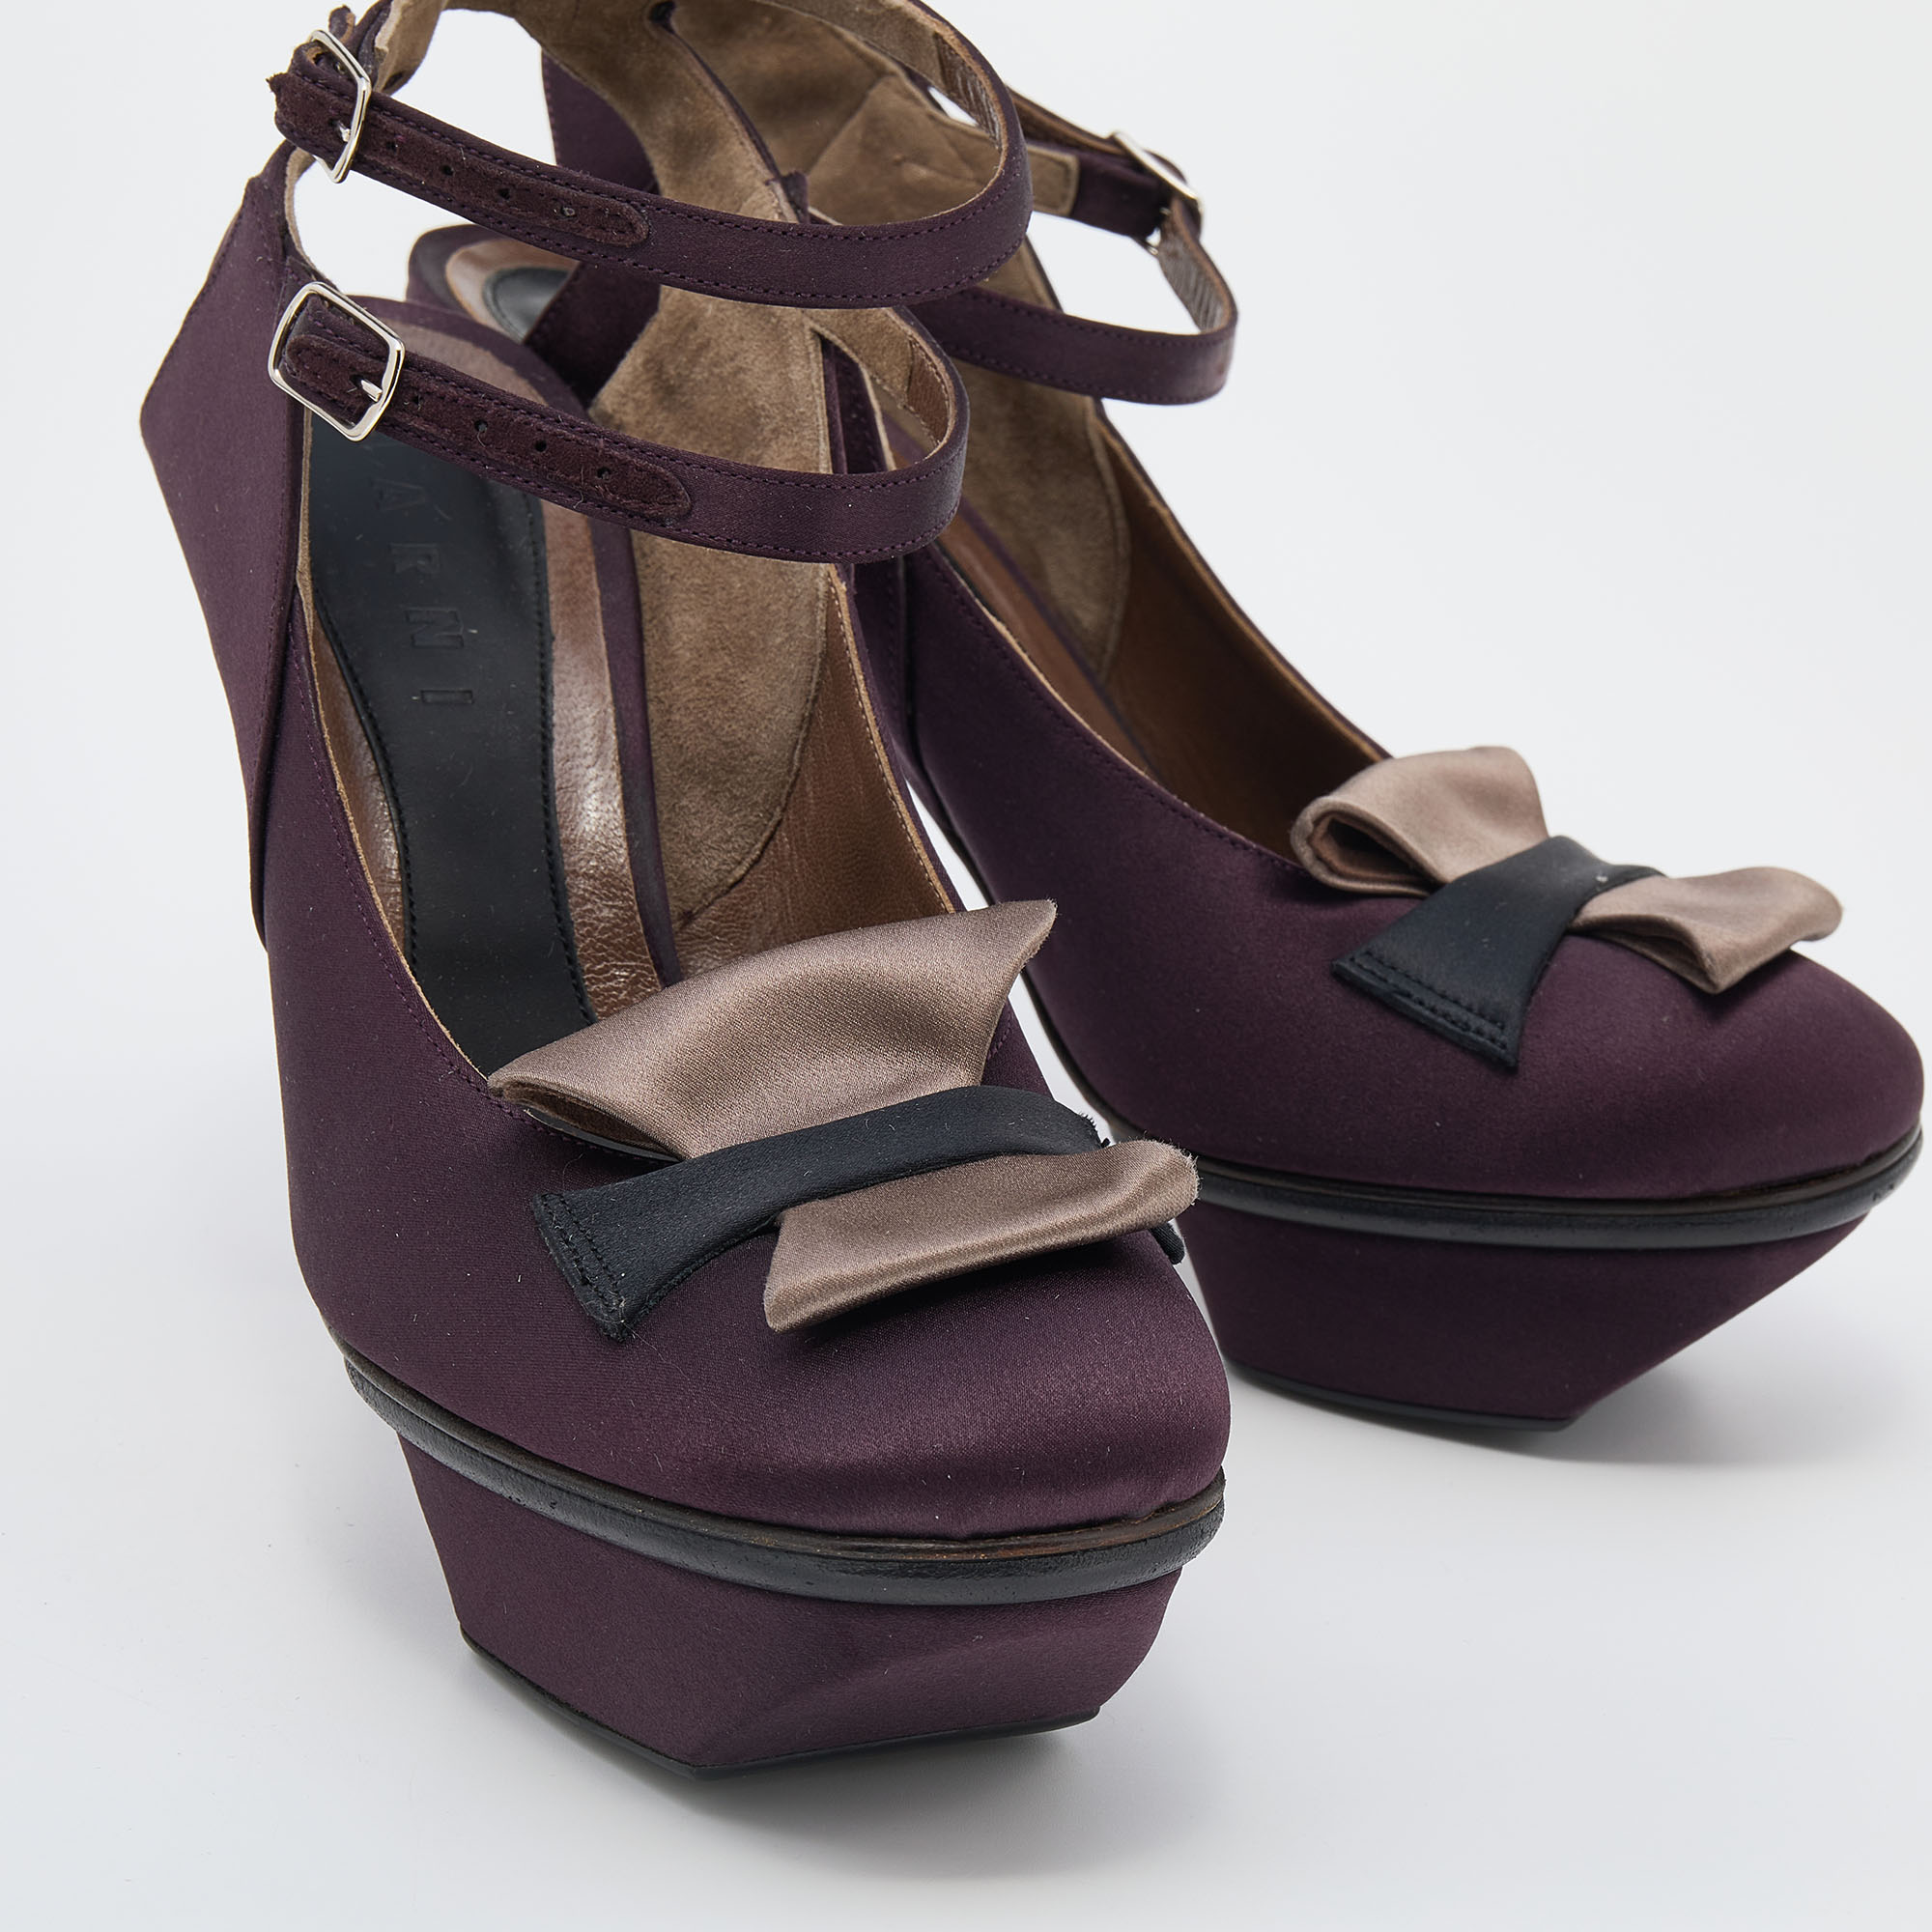 Marni Multicolor Satin Buckle Detail Platform Sandals Size 39